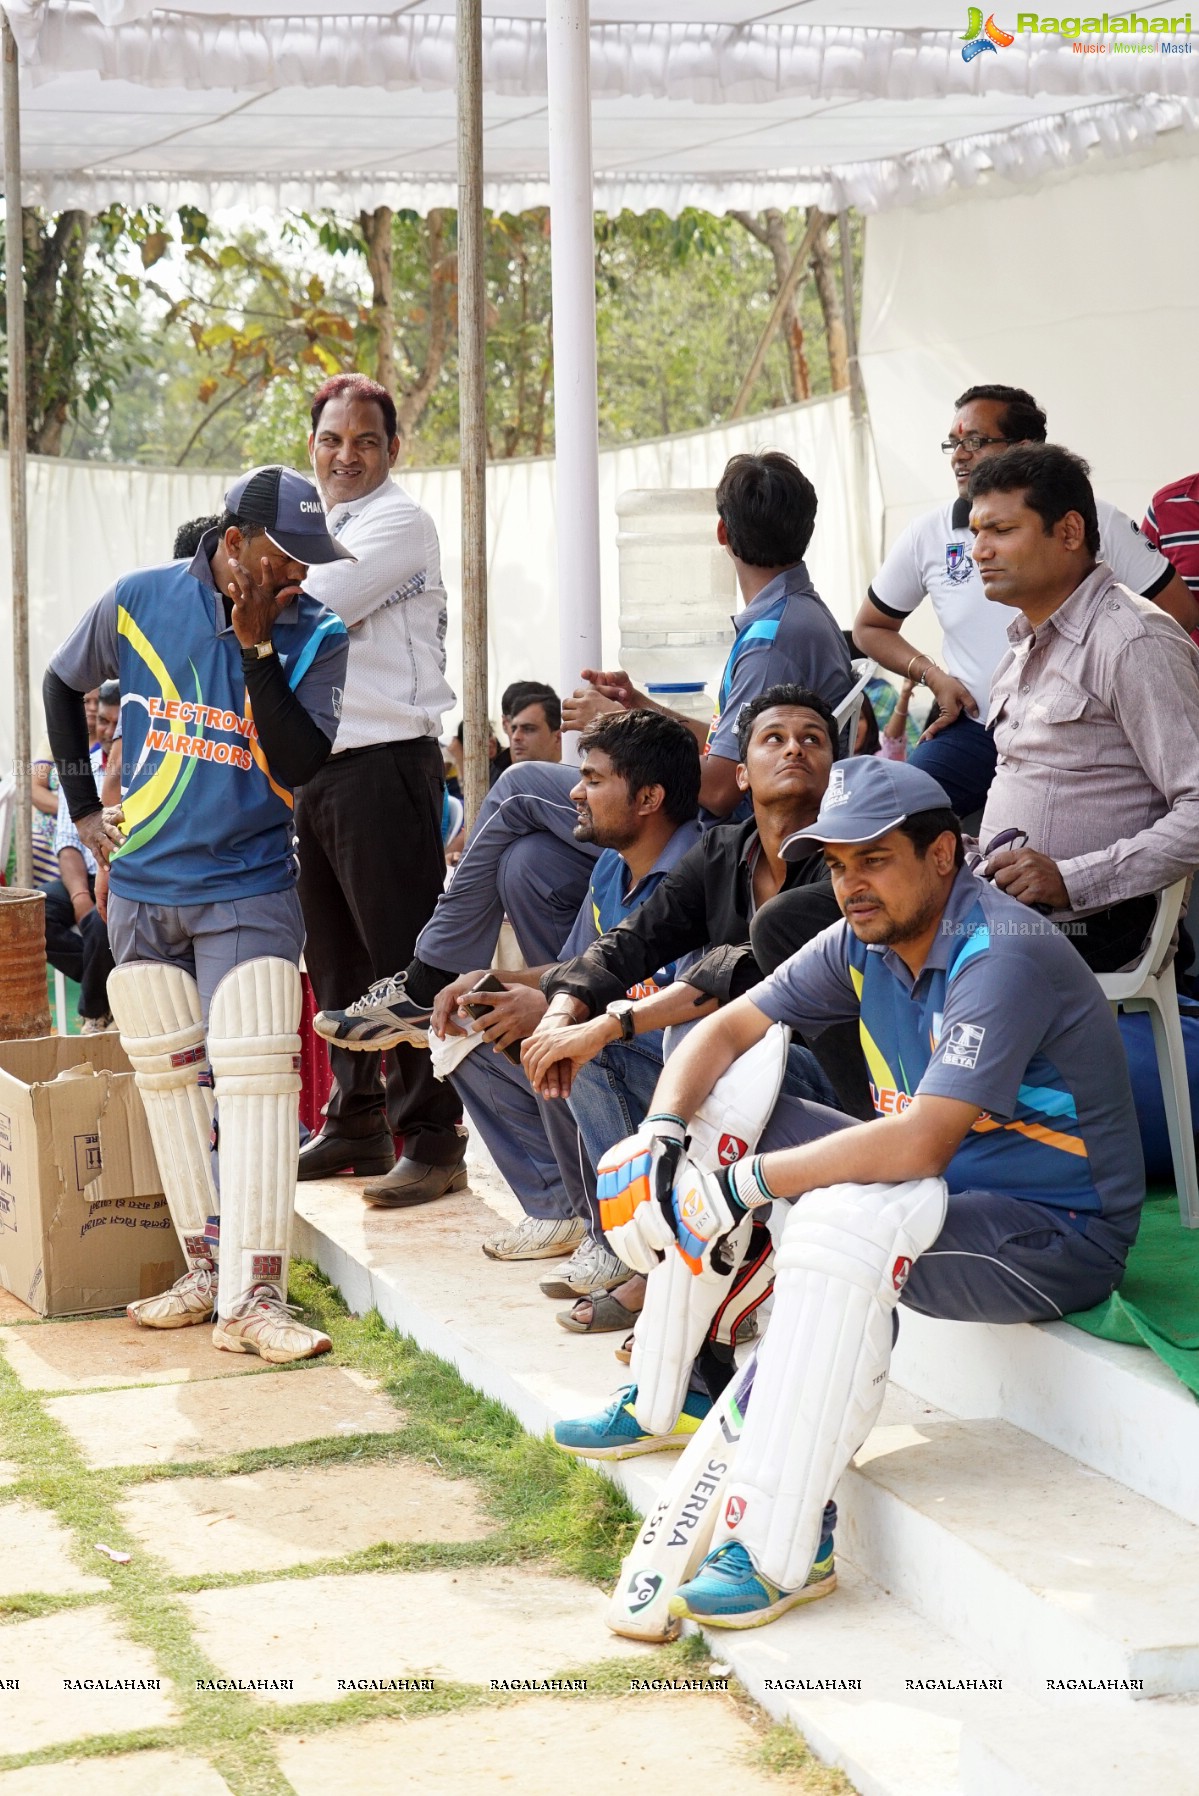 Seta-Finecab Cricket Premiere League 2015-16 Finals